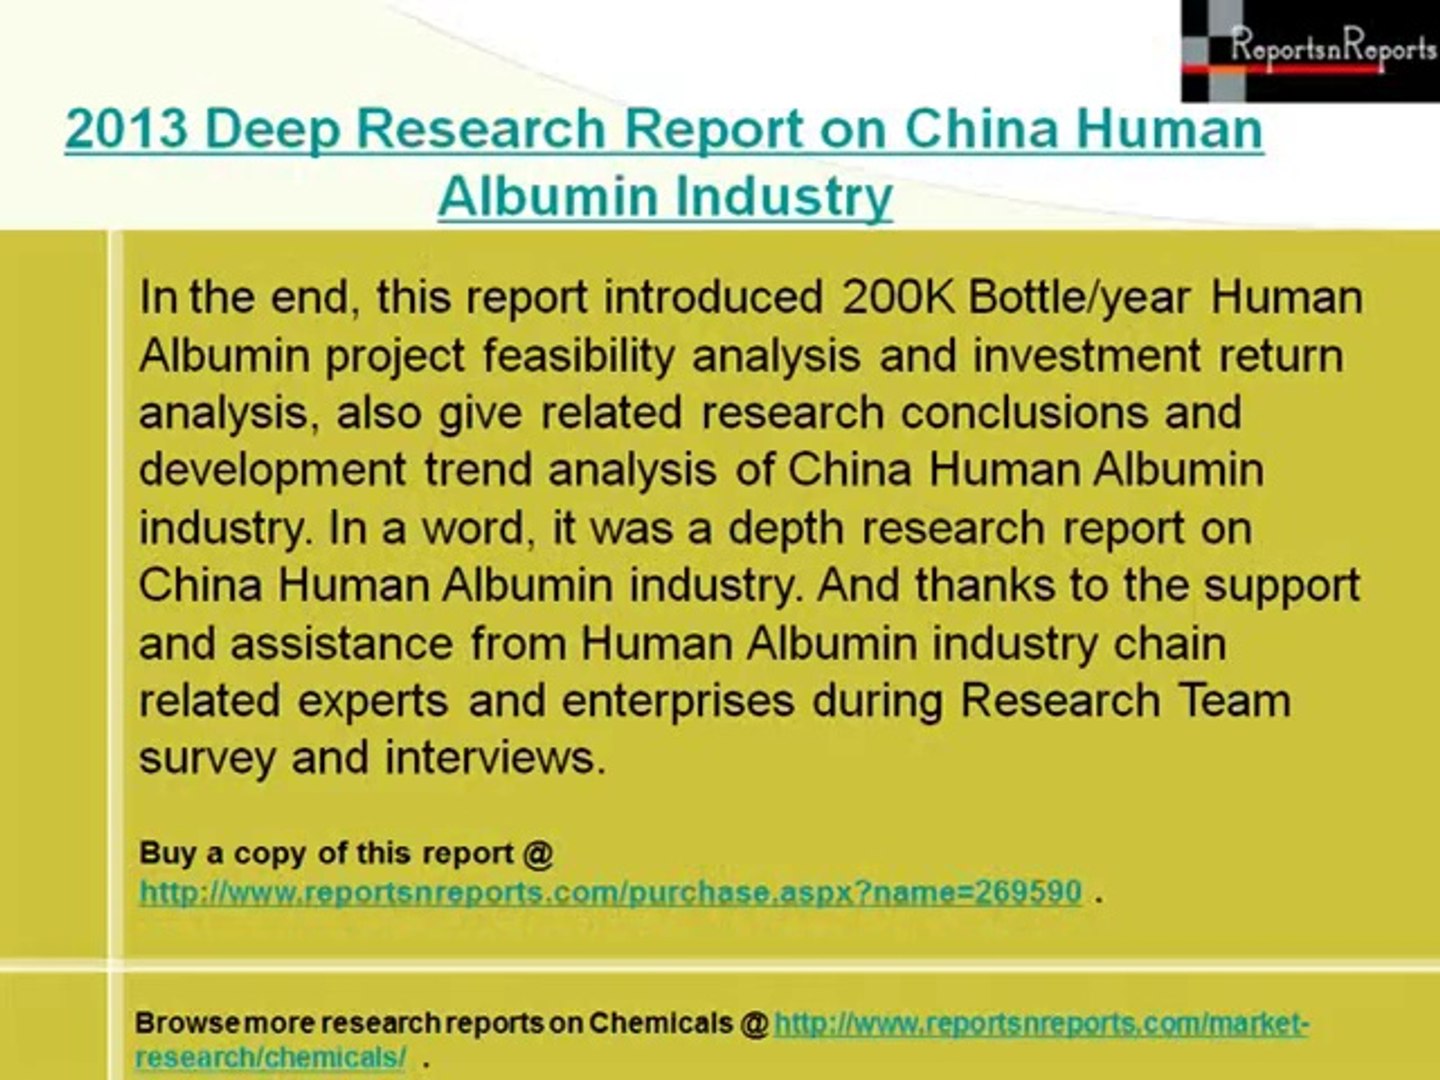 Latest News: Human Albumin Market in China